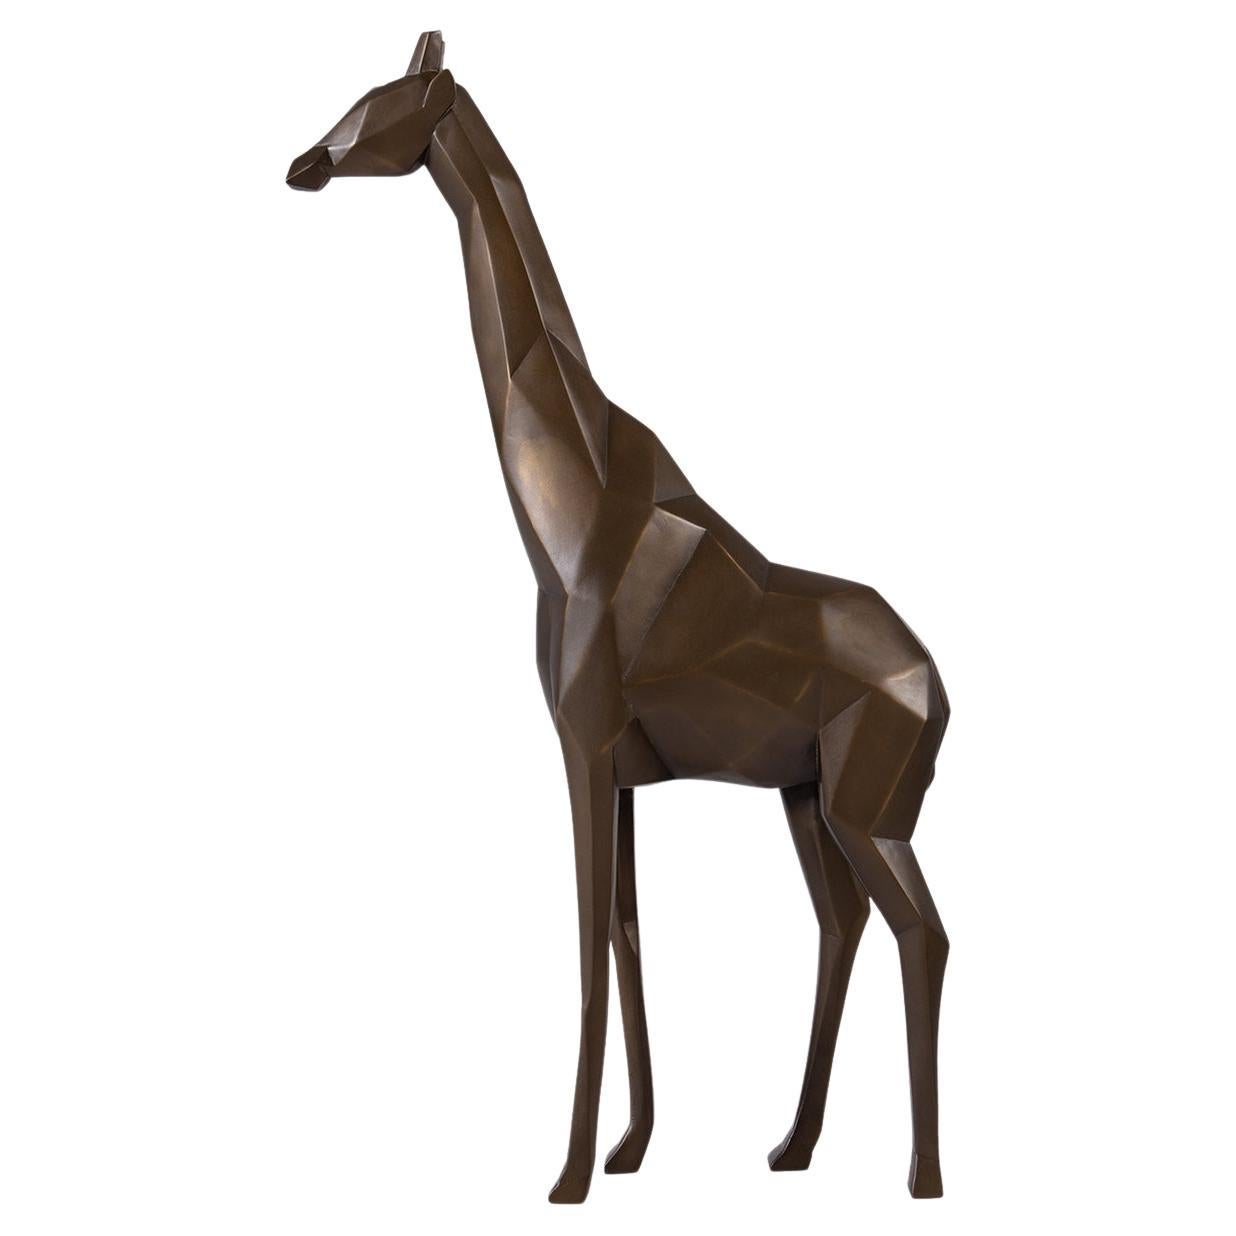 Girafle Sculpture For Sale